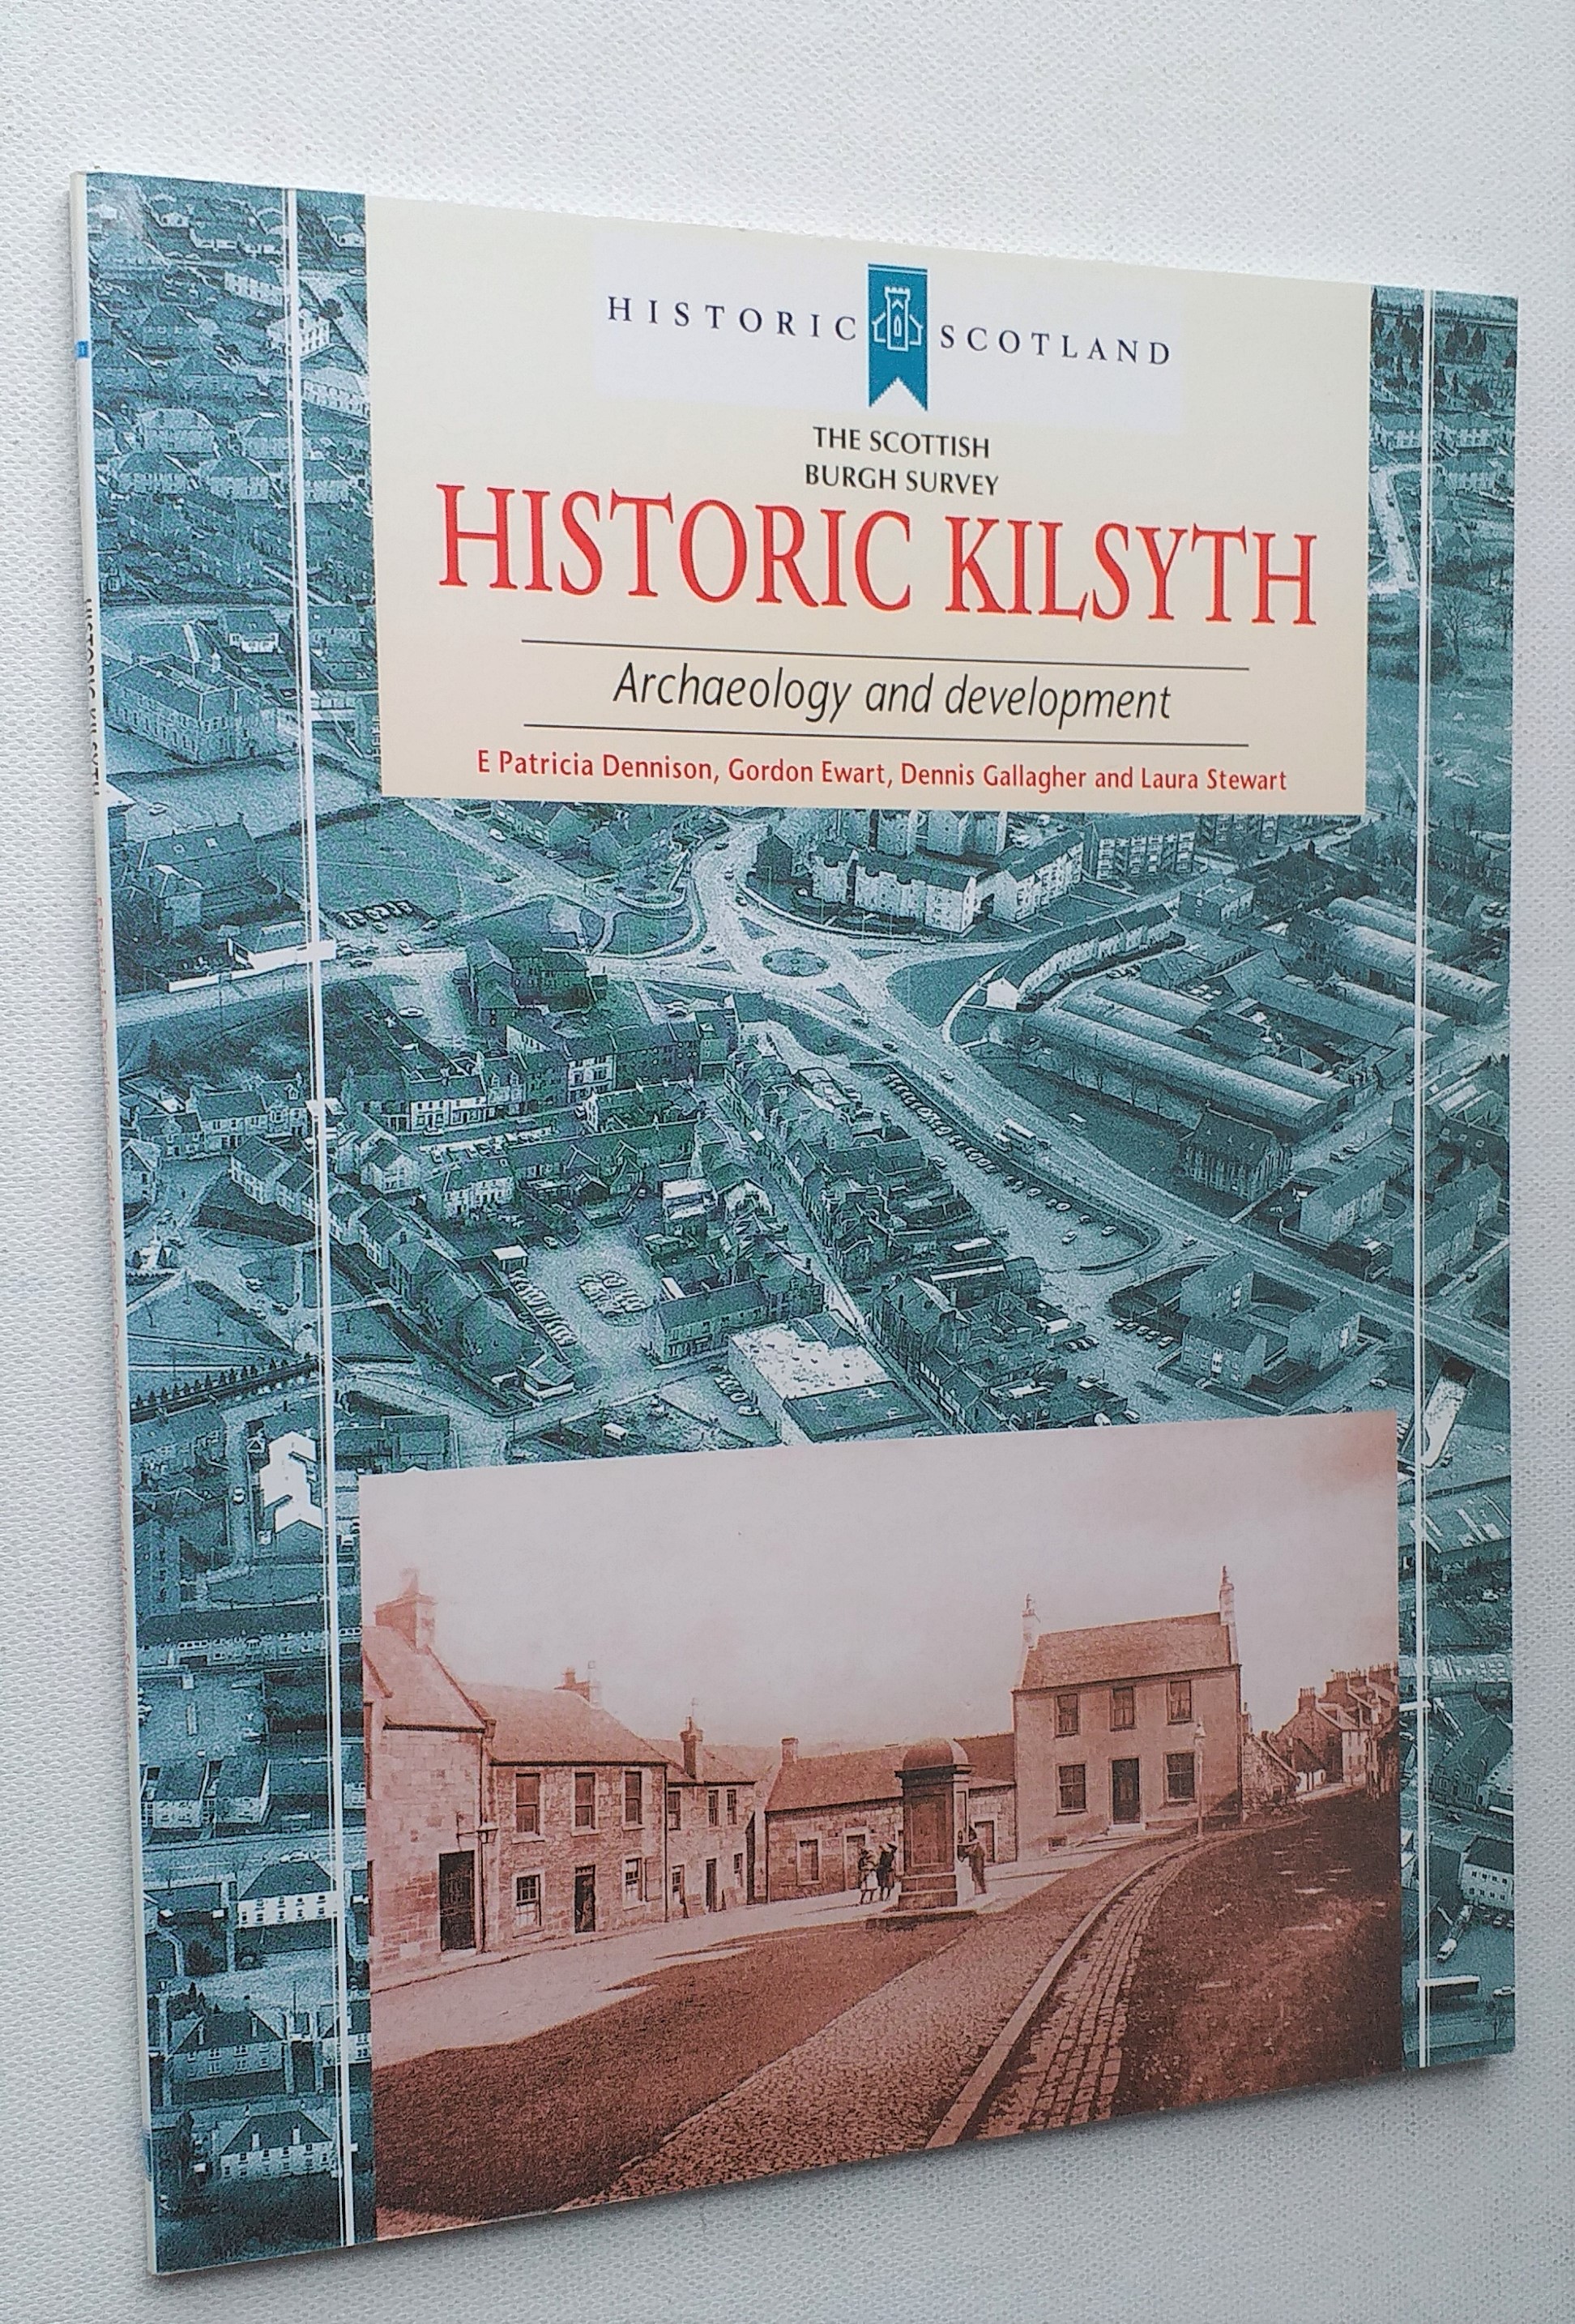 Historic Kilsyth: Archaeology and Development (Scottish Burgh Survey) - E. Patricia Dennison, Dennis Gallagher, Gordon Ewart